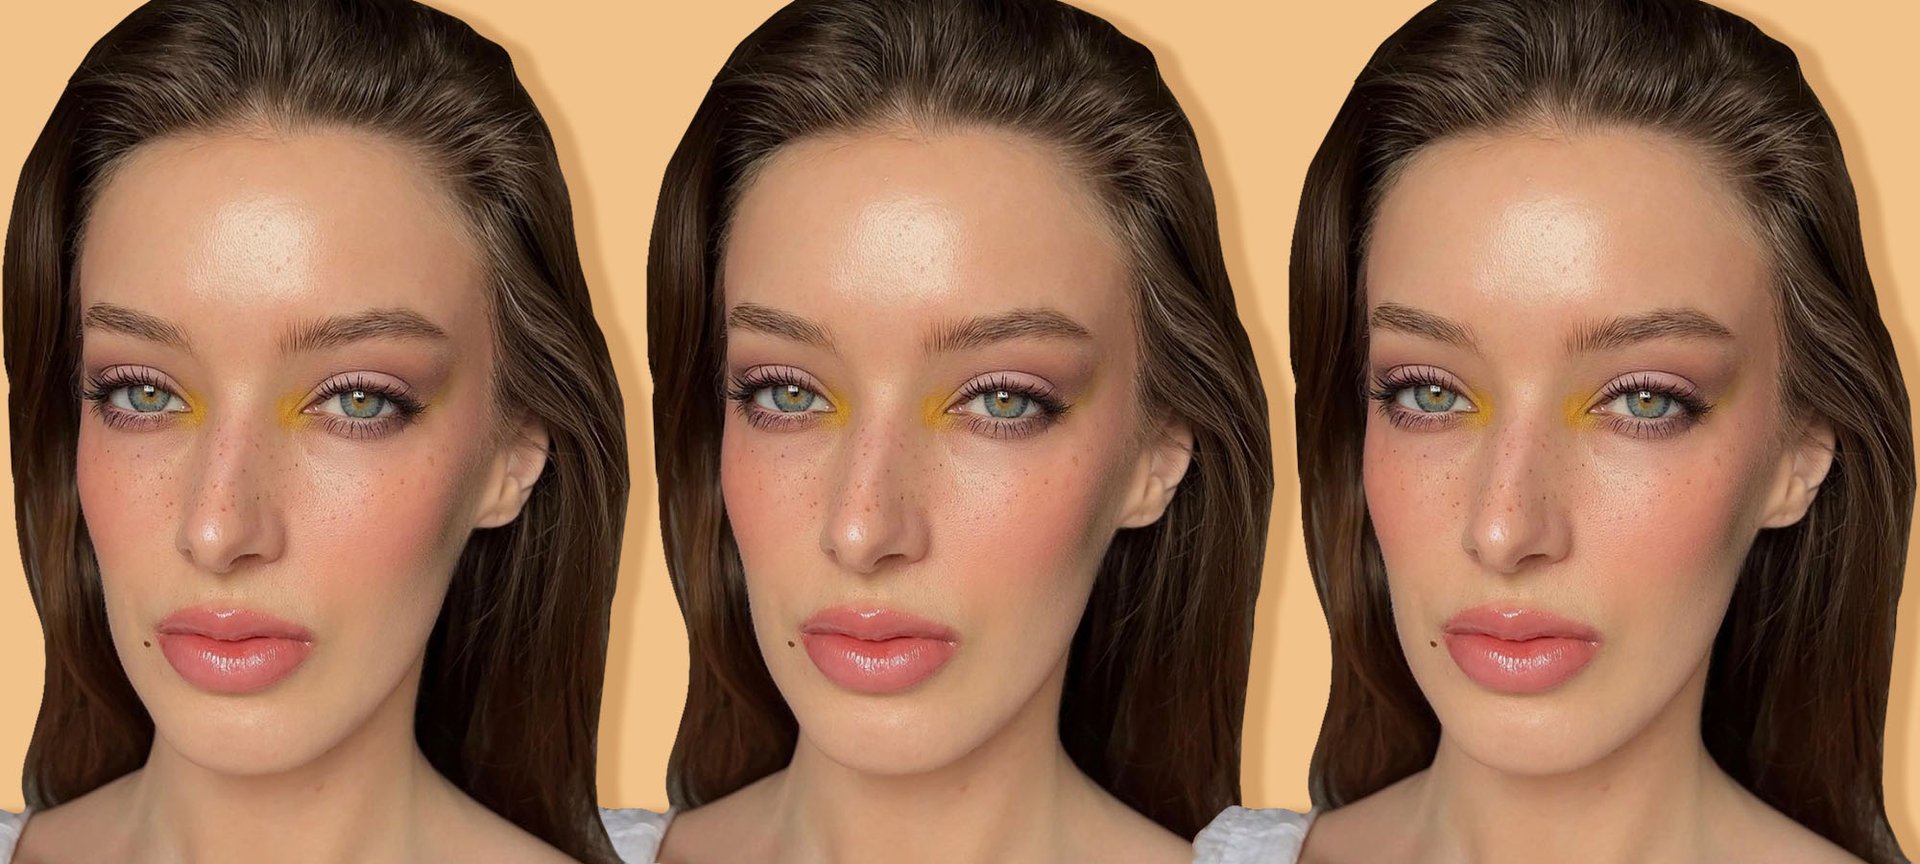 How to Get Fake Freckles With Makeup - L'Oréal Paris